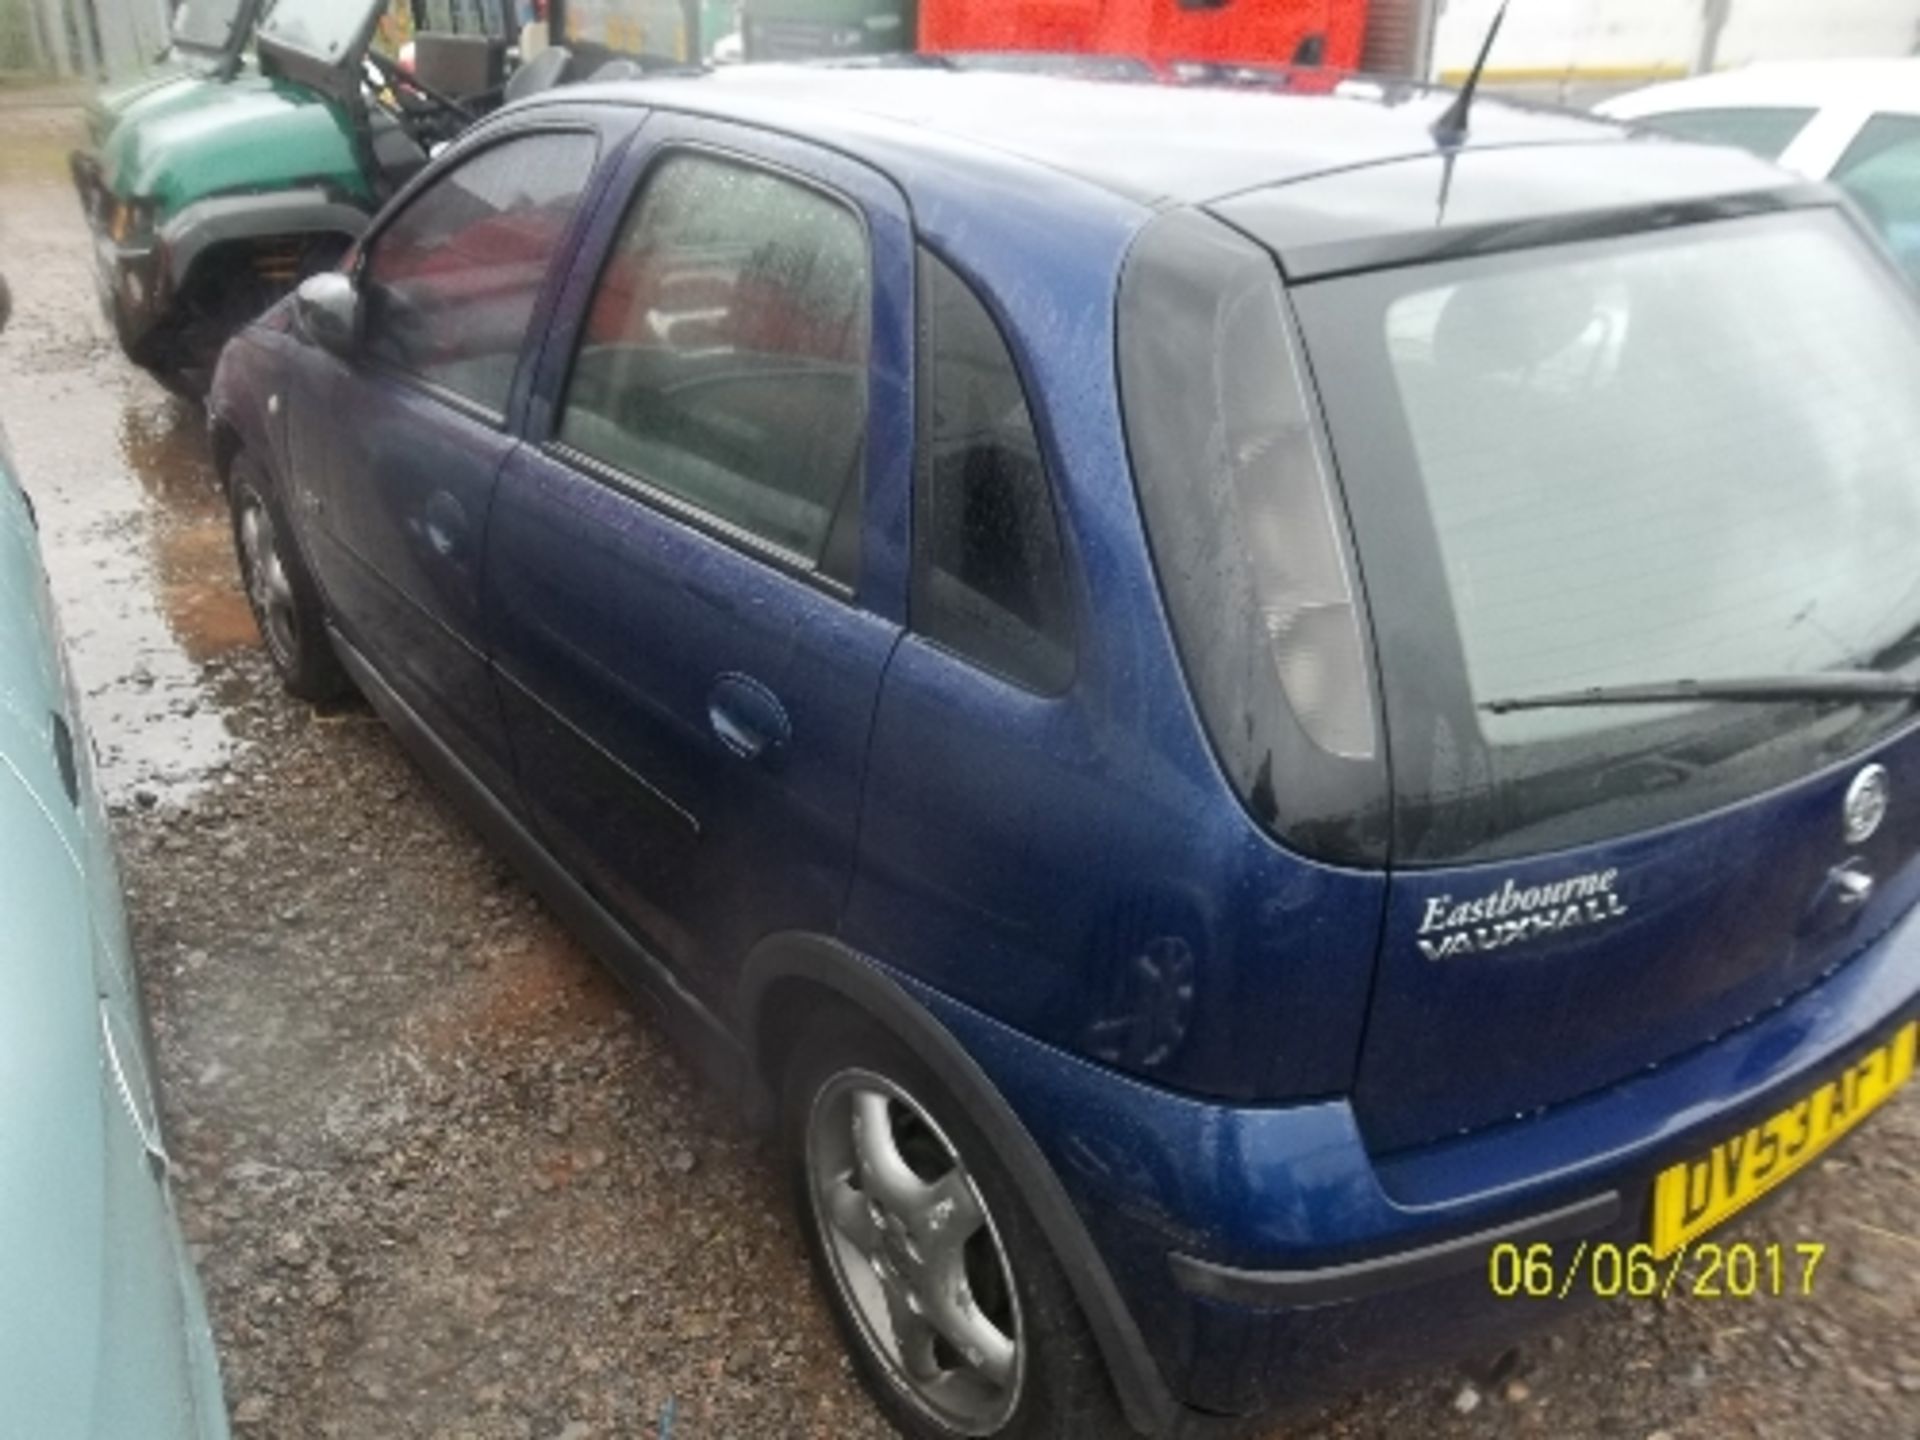 Vauxhall Corsa SXI CDTI - DV53 AFY Date of registration: 29.10.2003 1248cc, diesel, manual, blue - Image 4 of 4